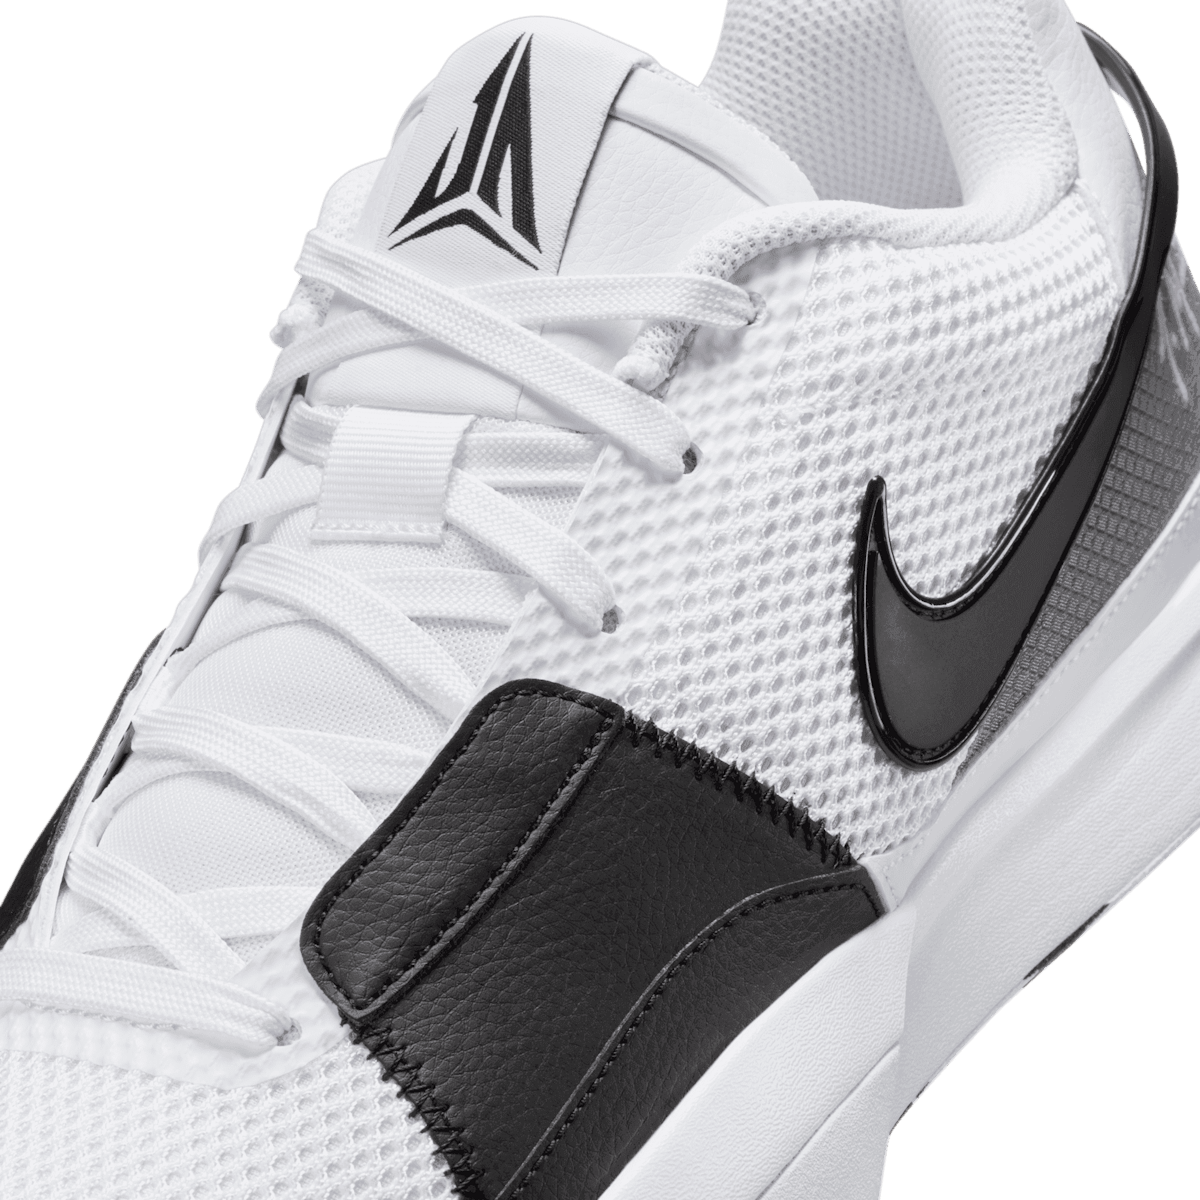 Nike Ja 1 White Black Angle 4